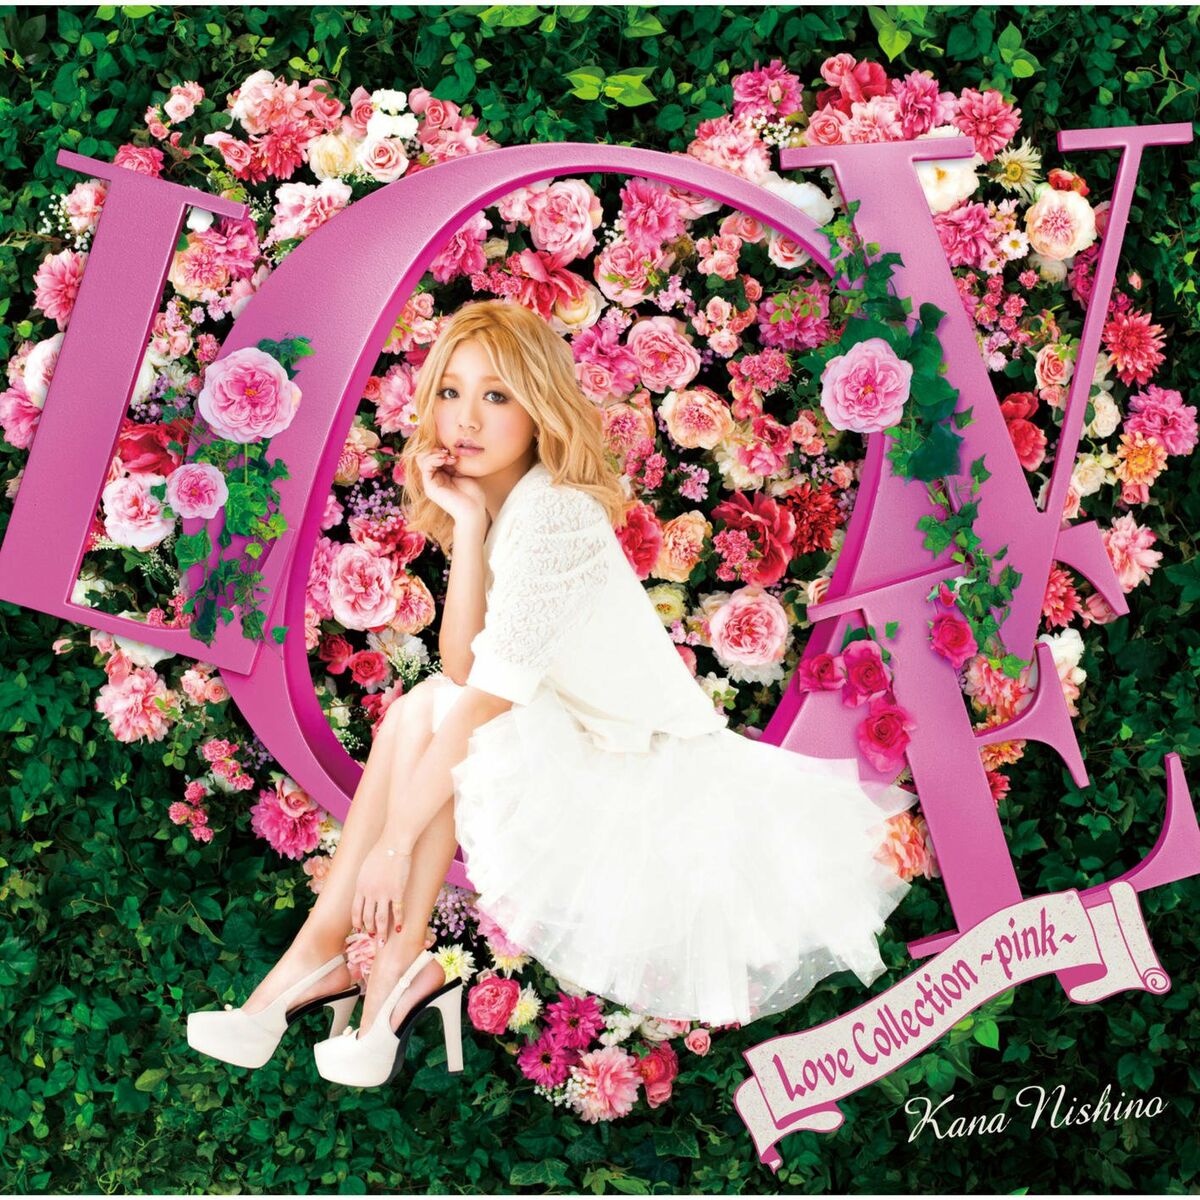 Kana Nishino - Love Collection 2 Pink: lyrics and songs | Deezer